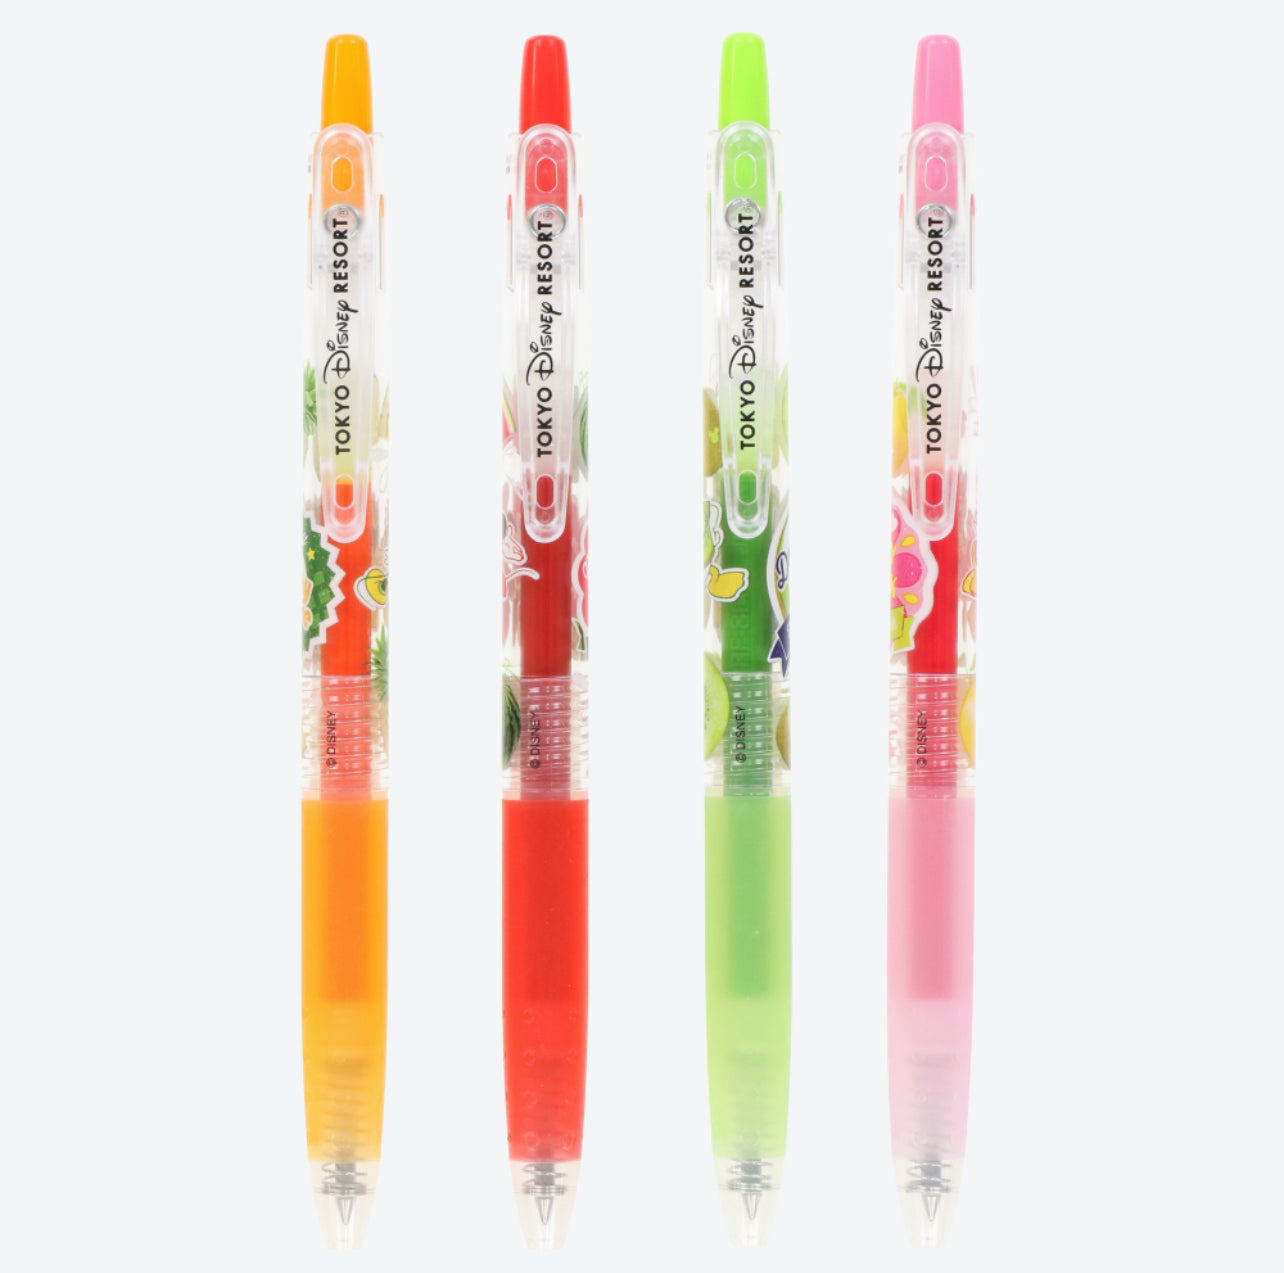 TDR - Mickey & Friends Fruits Party x PILOT Juice Gel Ink Ballpoint Pen Set (Release Date: May 25)